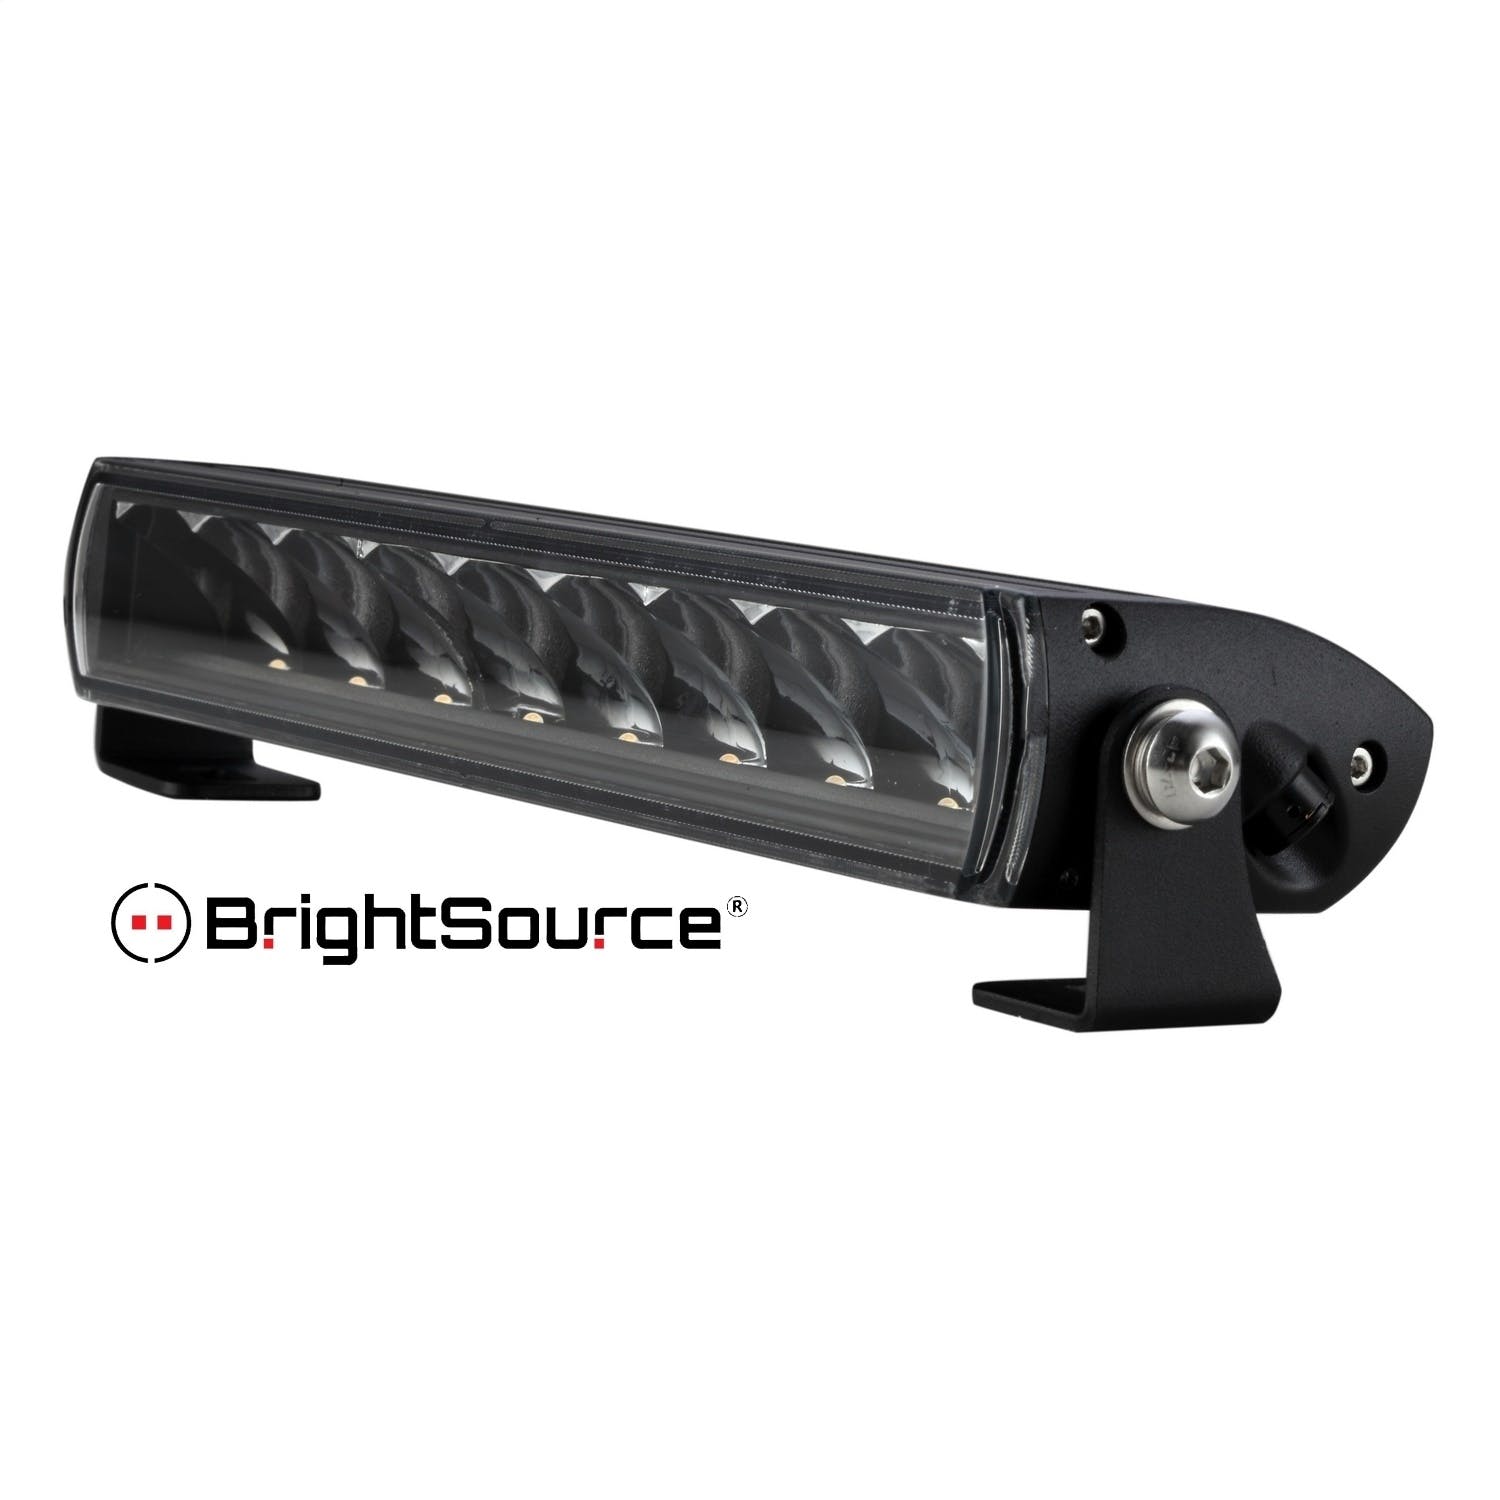 BrightSource 771102 Titanium Series LED Light Bar